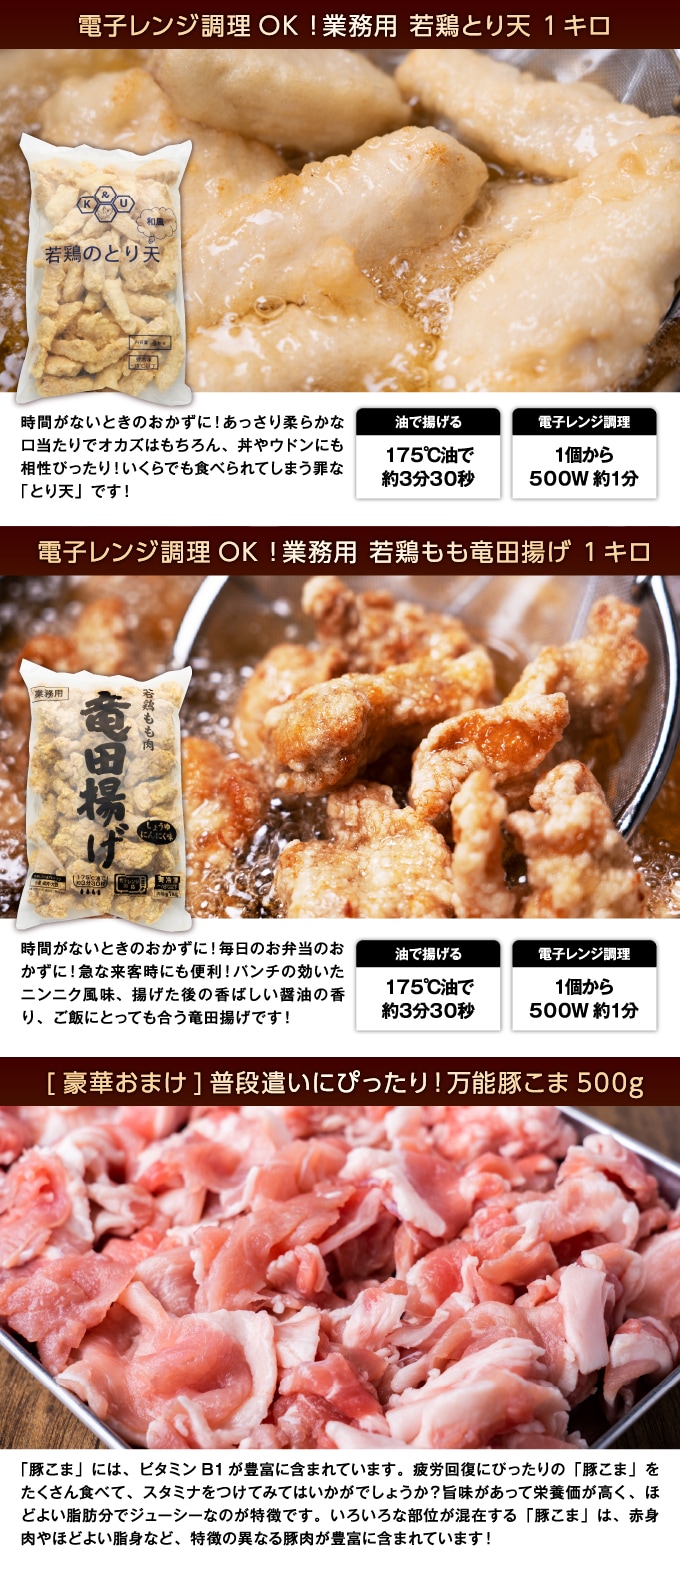 The Oniku 肉の卸問屋アオノ竜田揚げ 鶏肉 若鶏モモ肉 にんにく醤油味 1kg 食品 電子レンジで簡単調理 冷凍